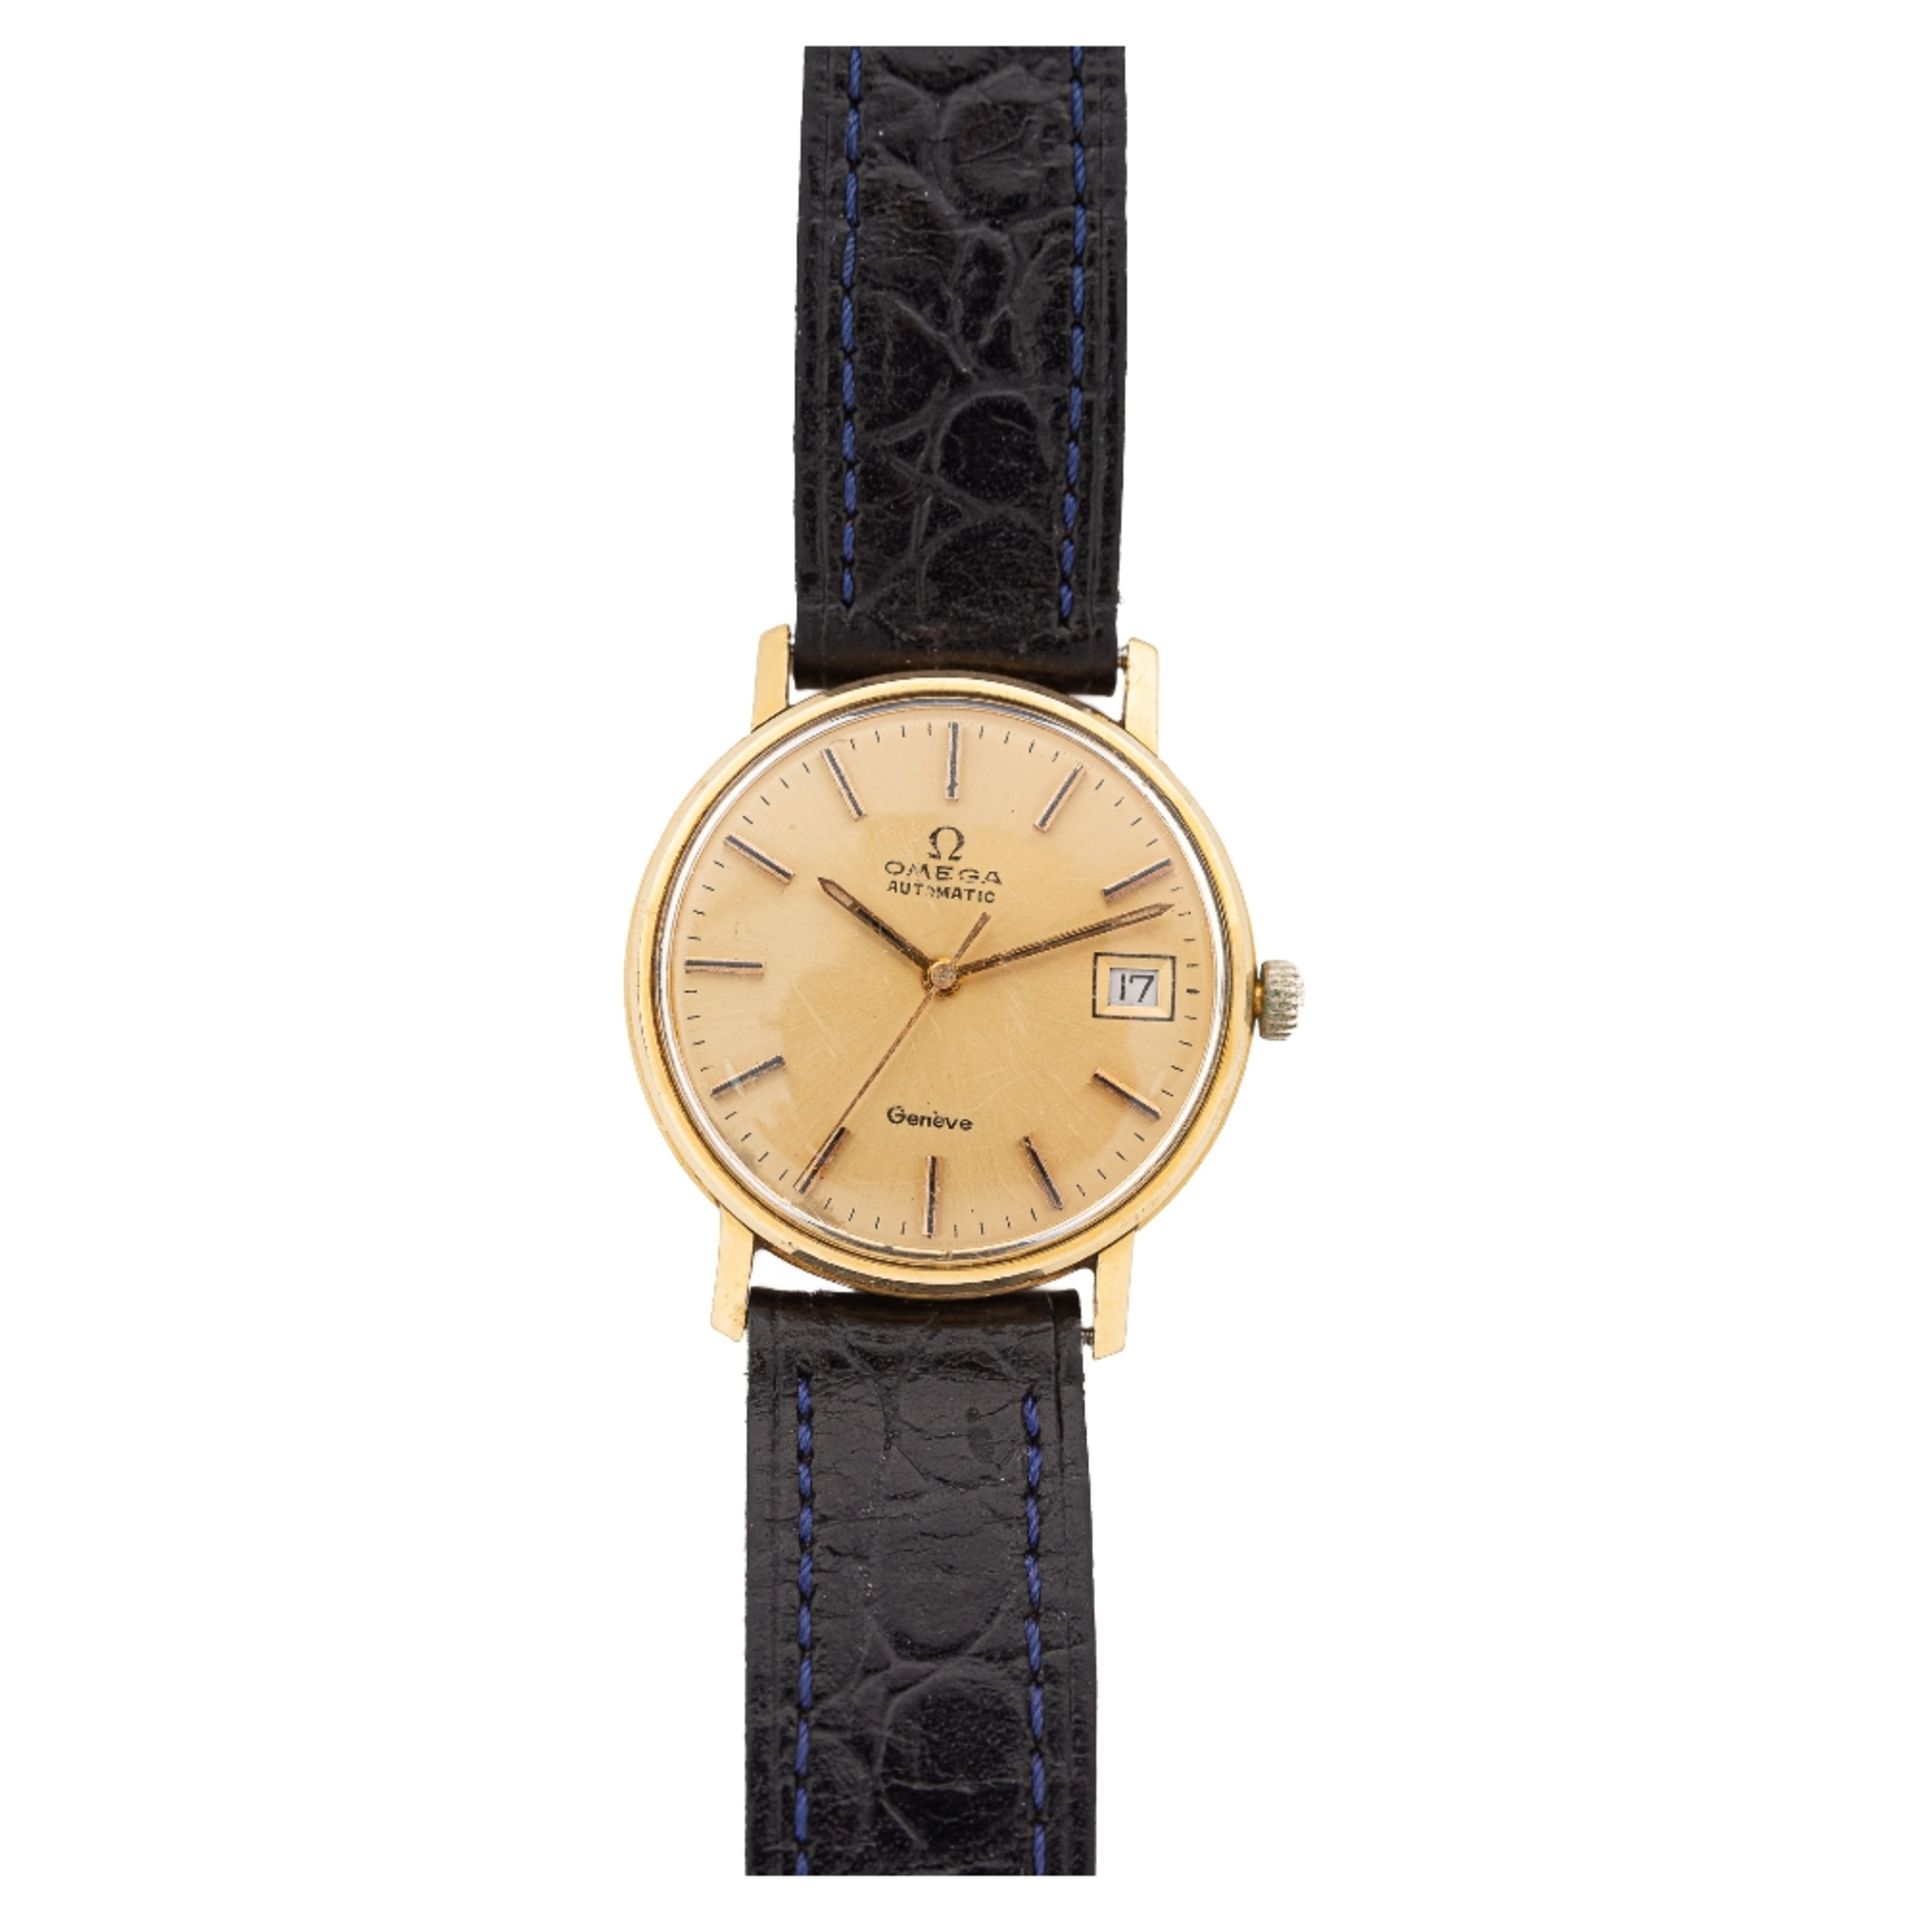 Omega, reloj de pulsera para cadete en oro, c.1970.